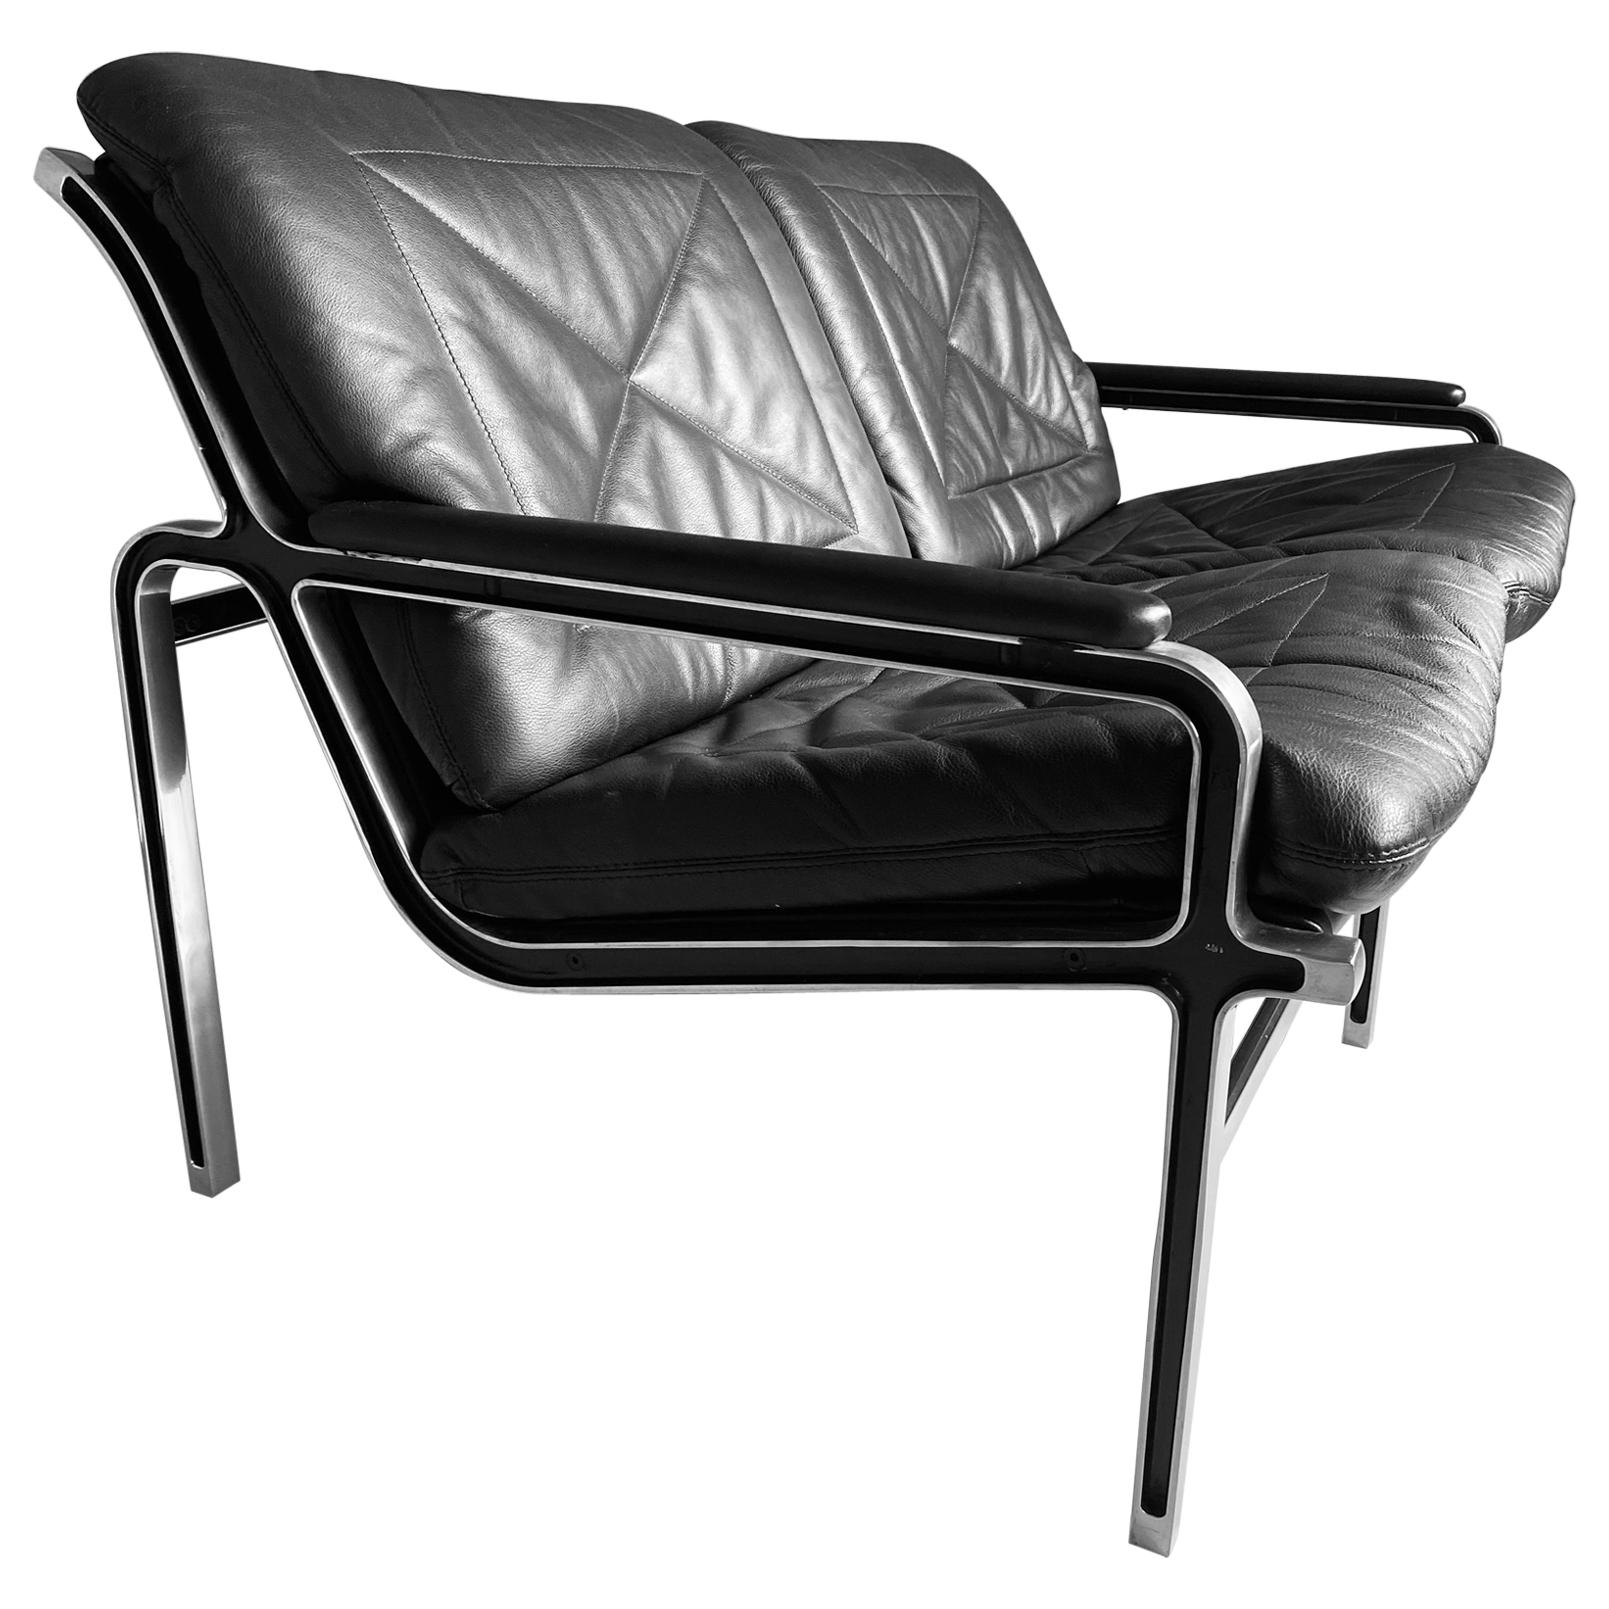 Andre Vanden Beuck Aluminium and Black Leather Sofa